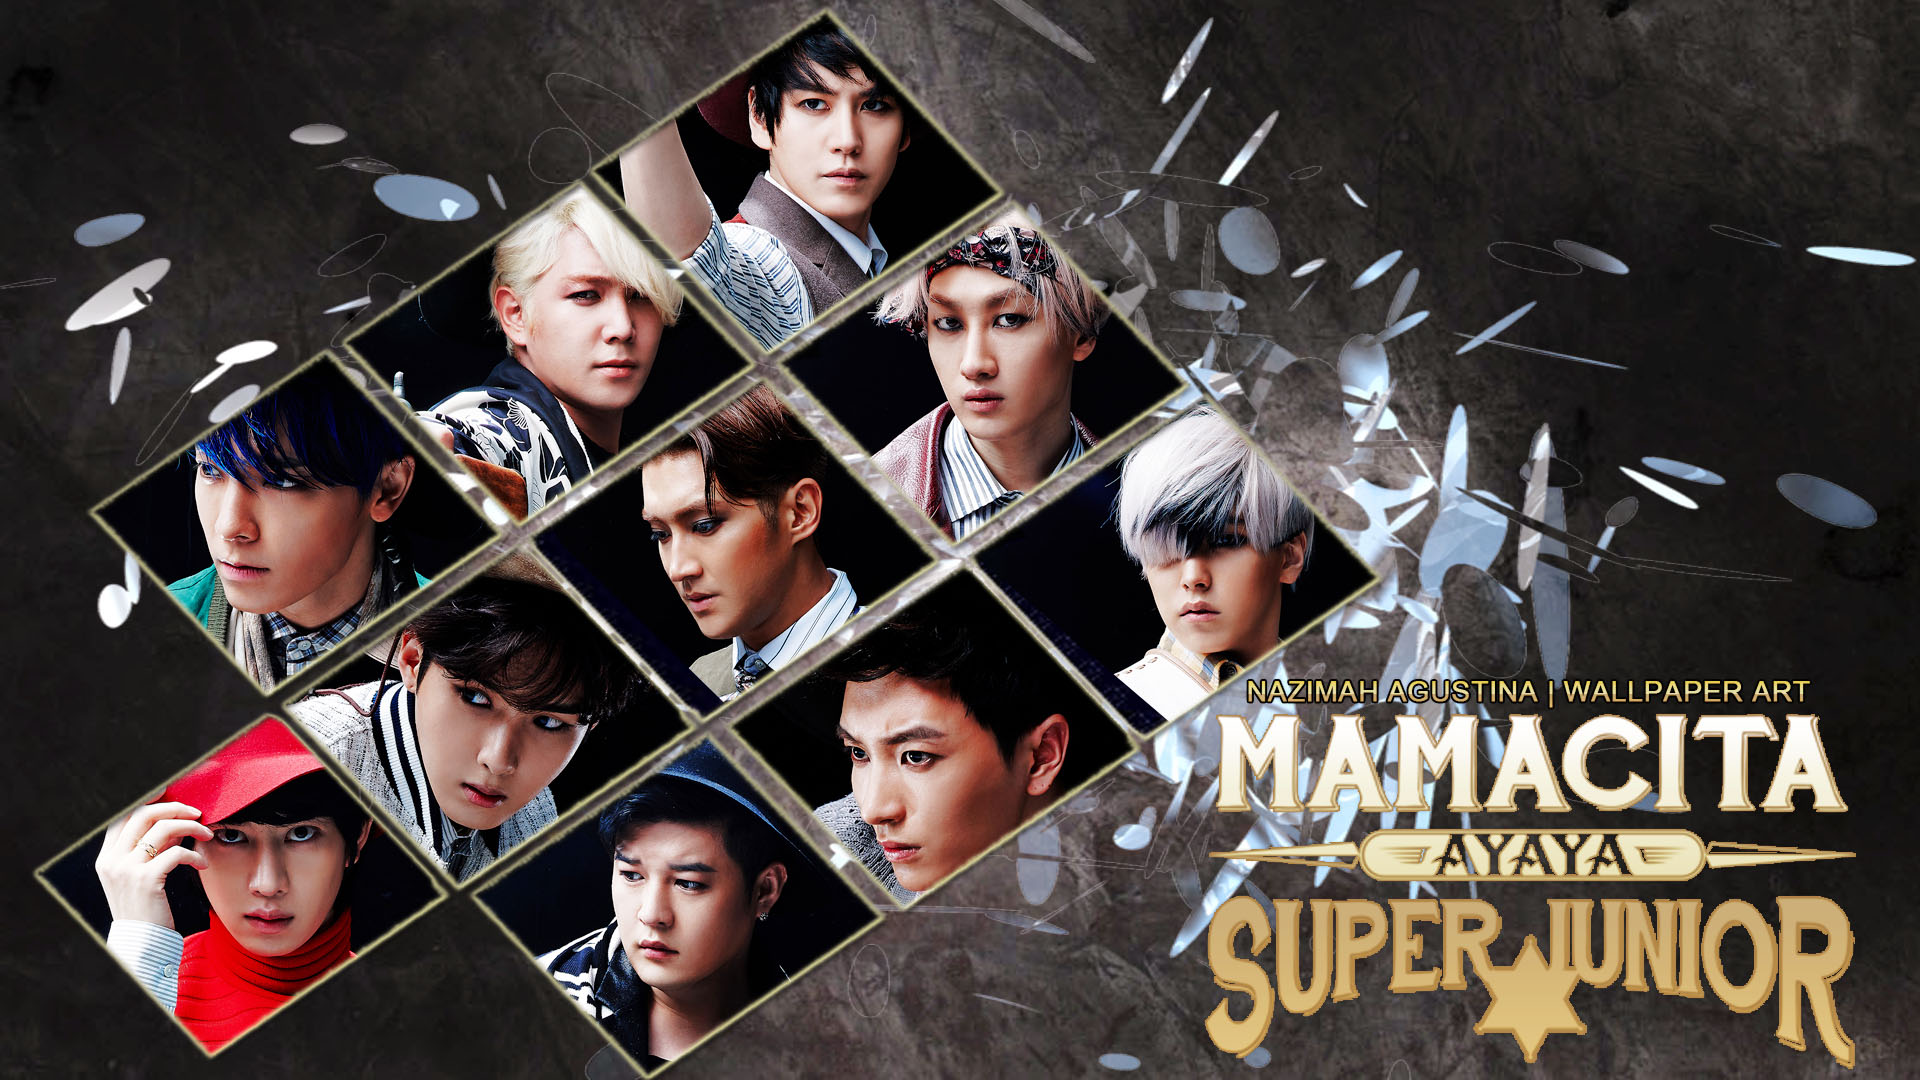 Wallpapers Happy 9th Anniversary Super Junior AgustiNazimah